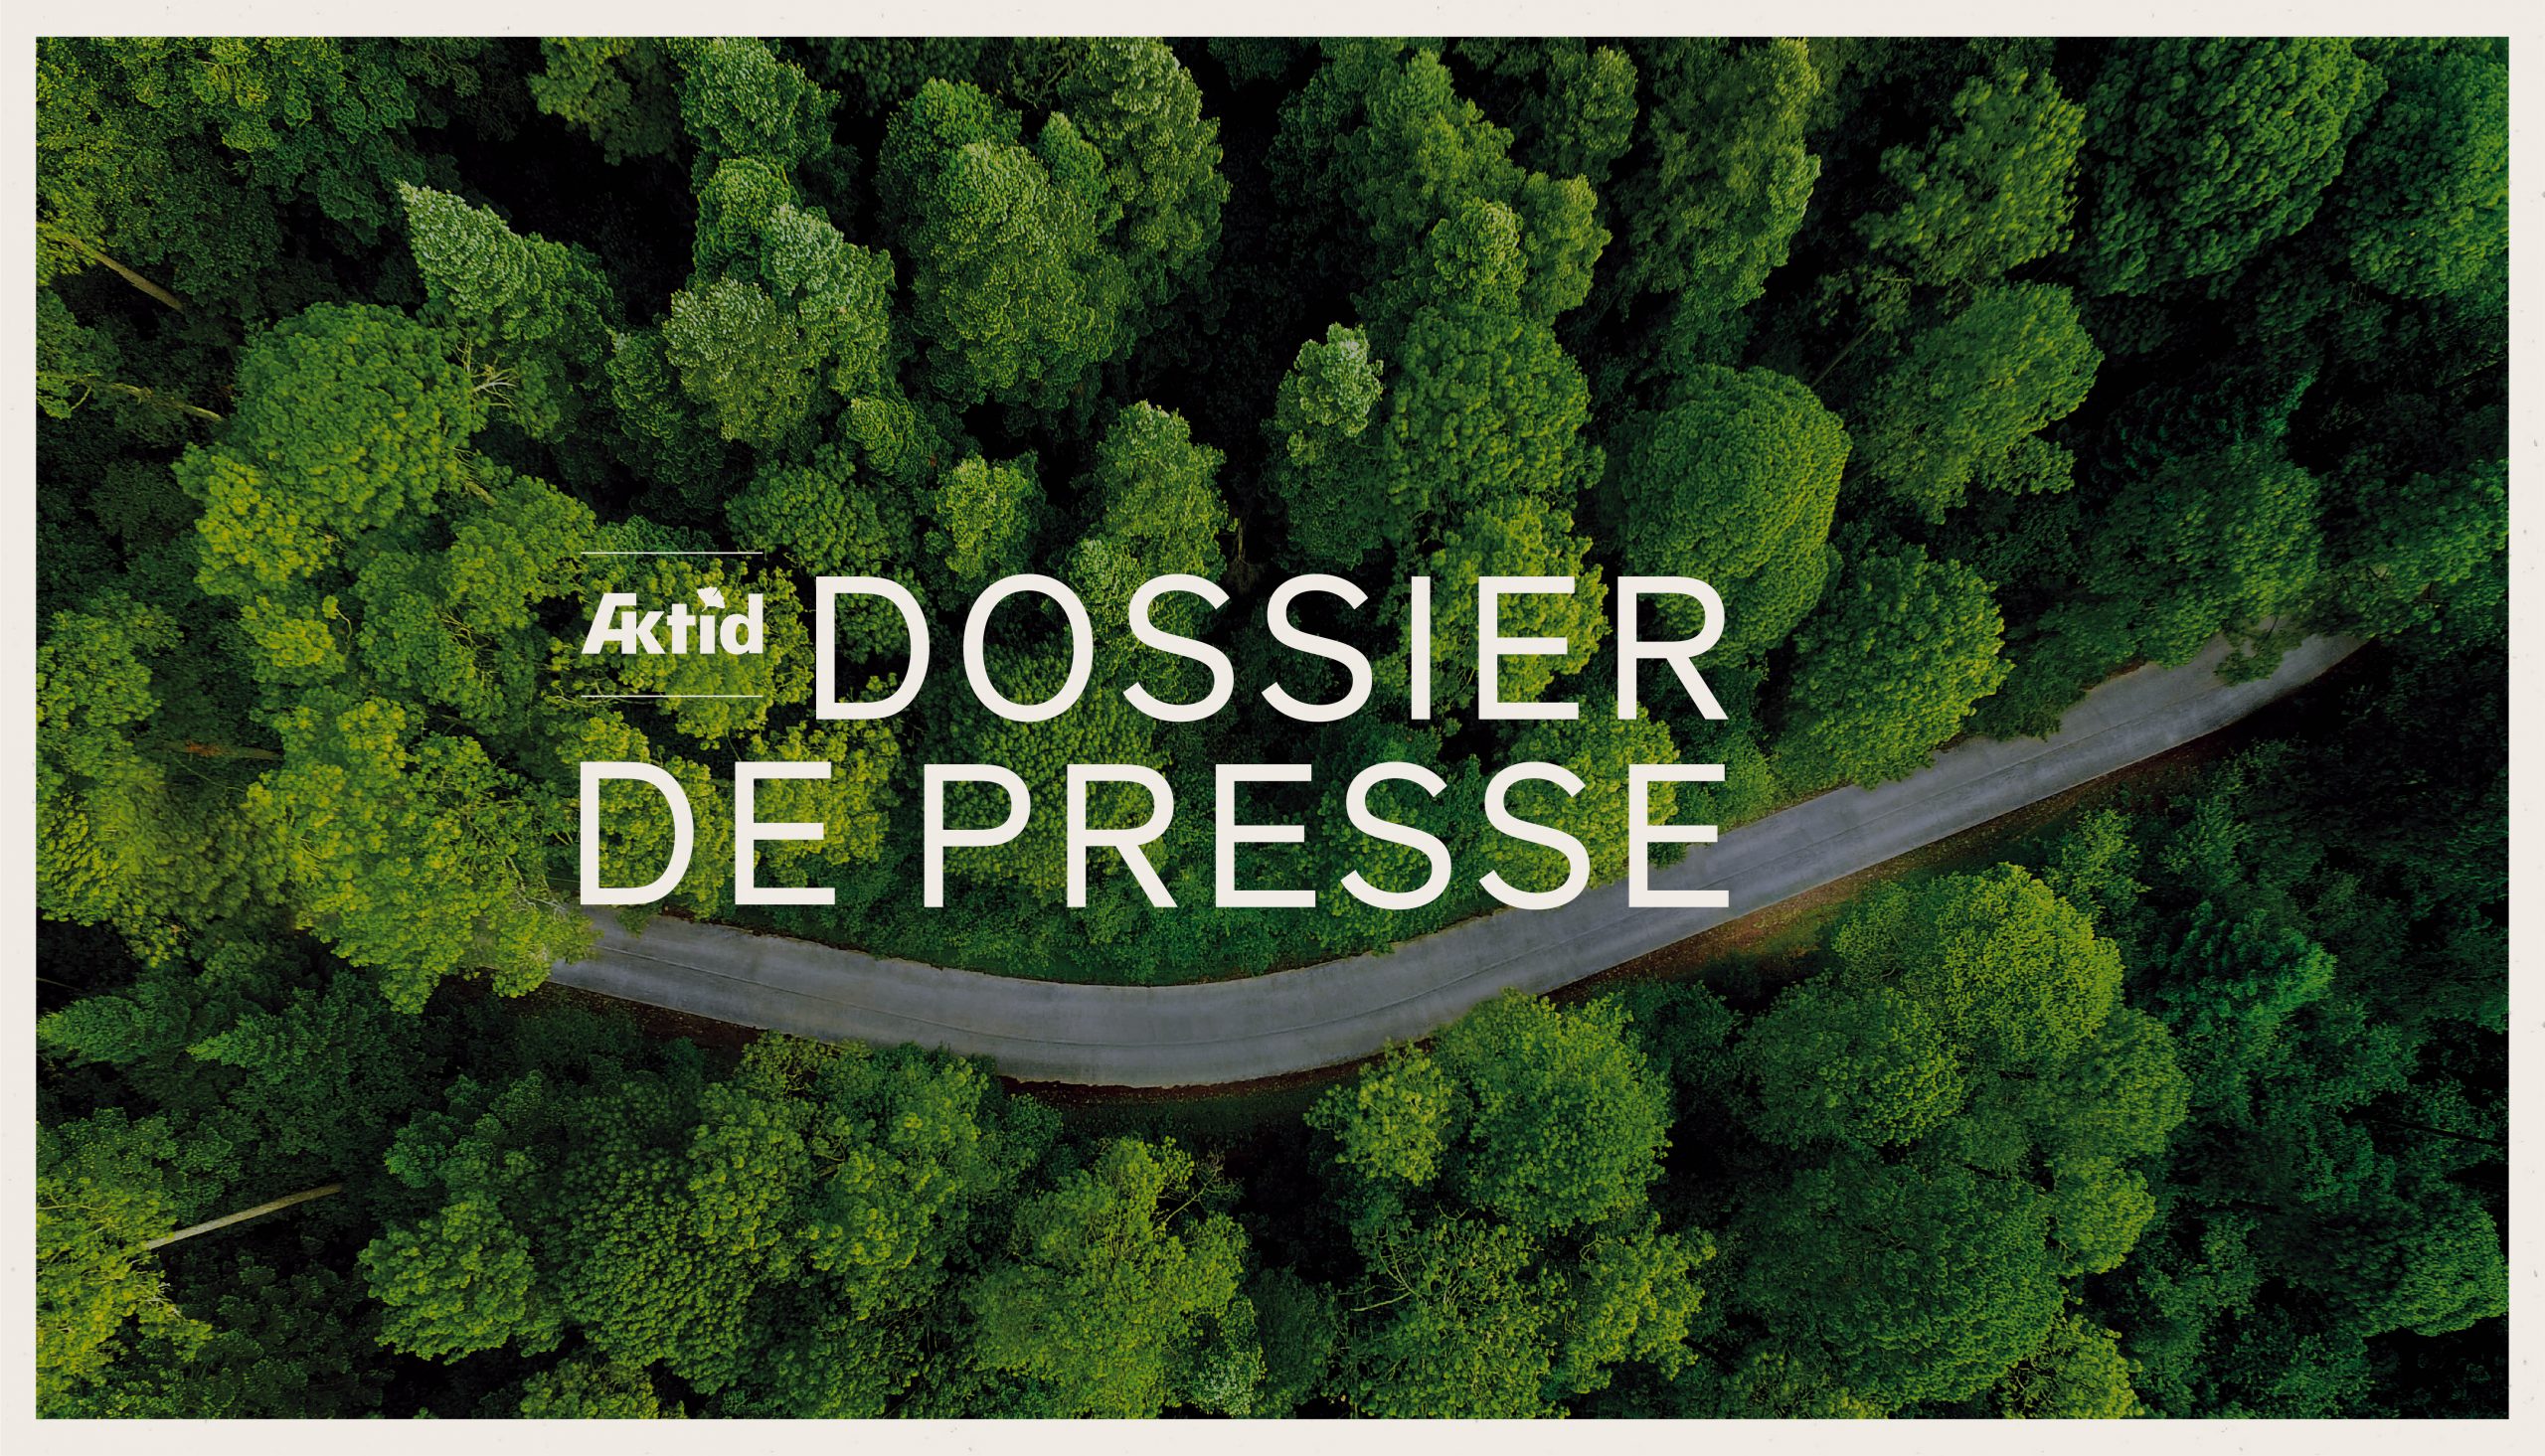 Aktid_Dossier de presse